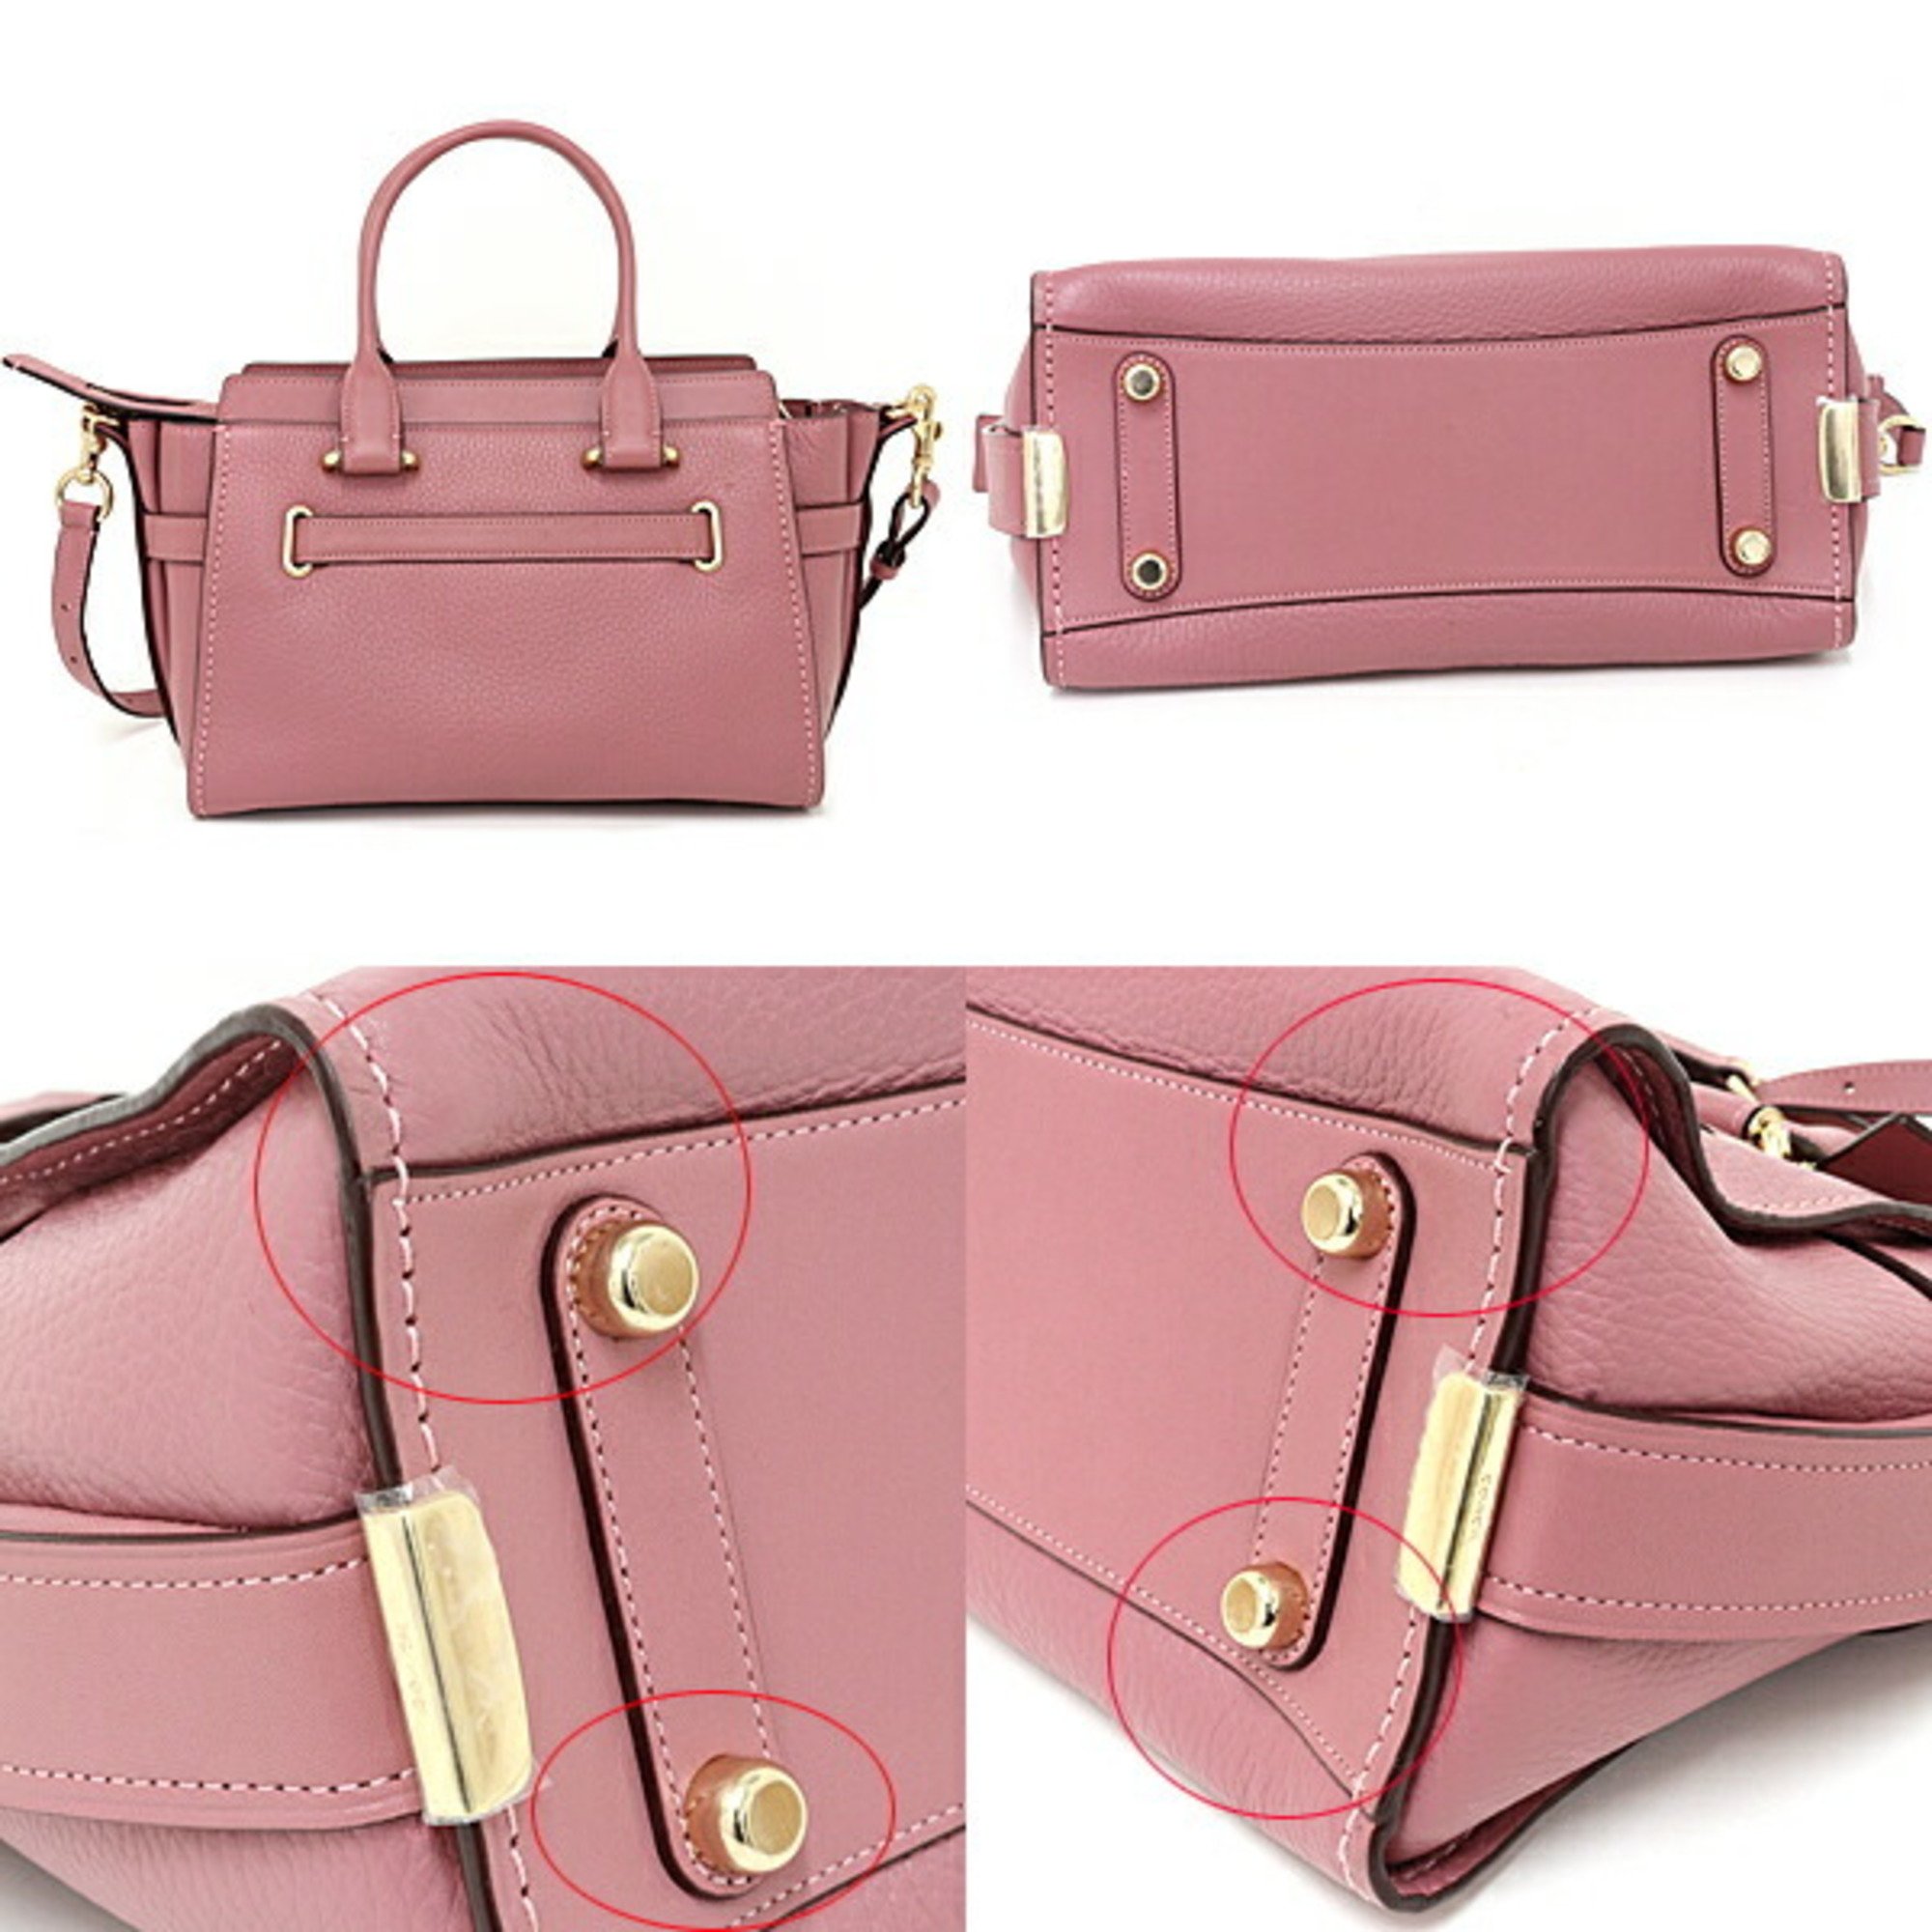 Coach COACH Swagger 27 Handbag Shoulder Bag 2WAY 87295 Rose Pink Gold Hardware